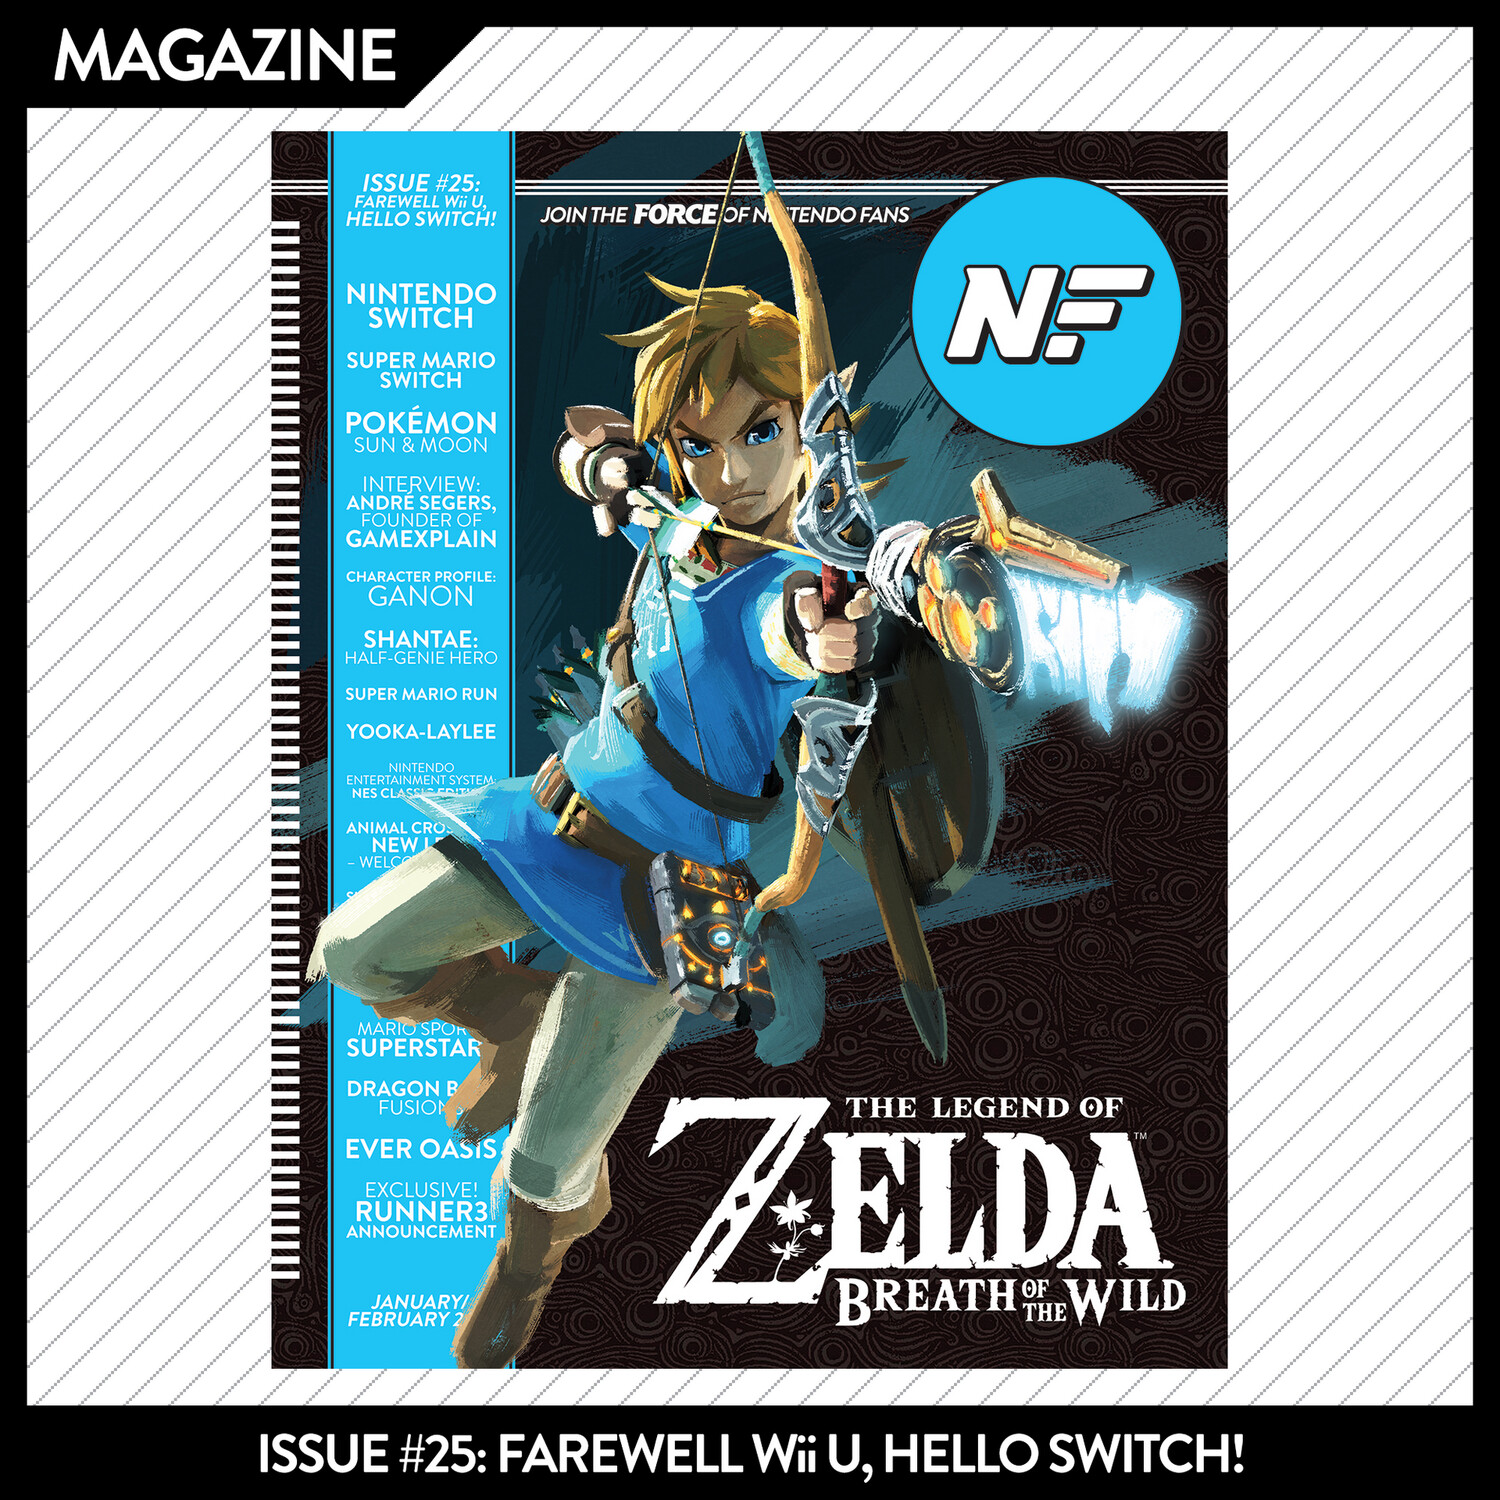 Issue #25: Farewell Wii U, Hello Switch! – January/February 2017